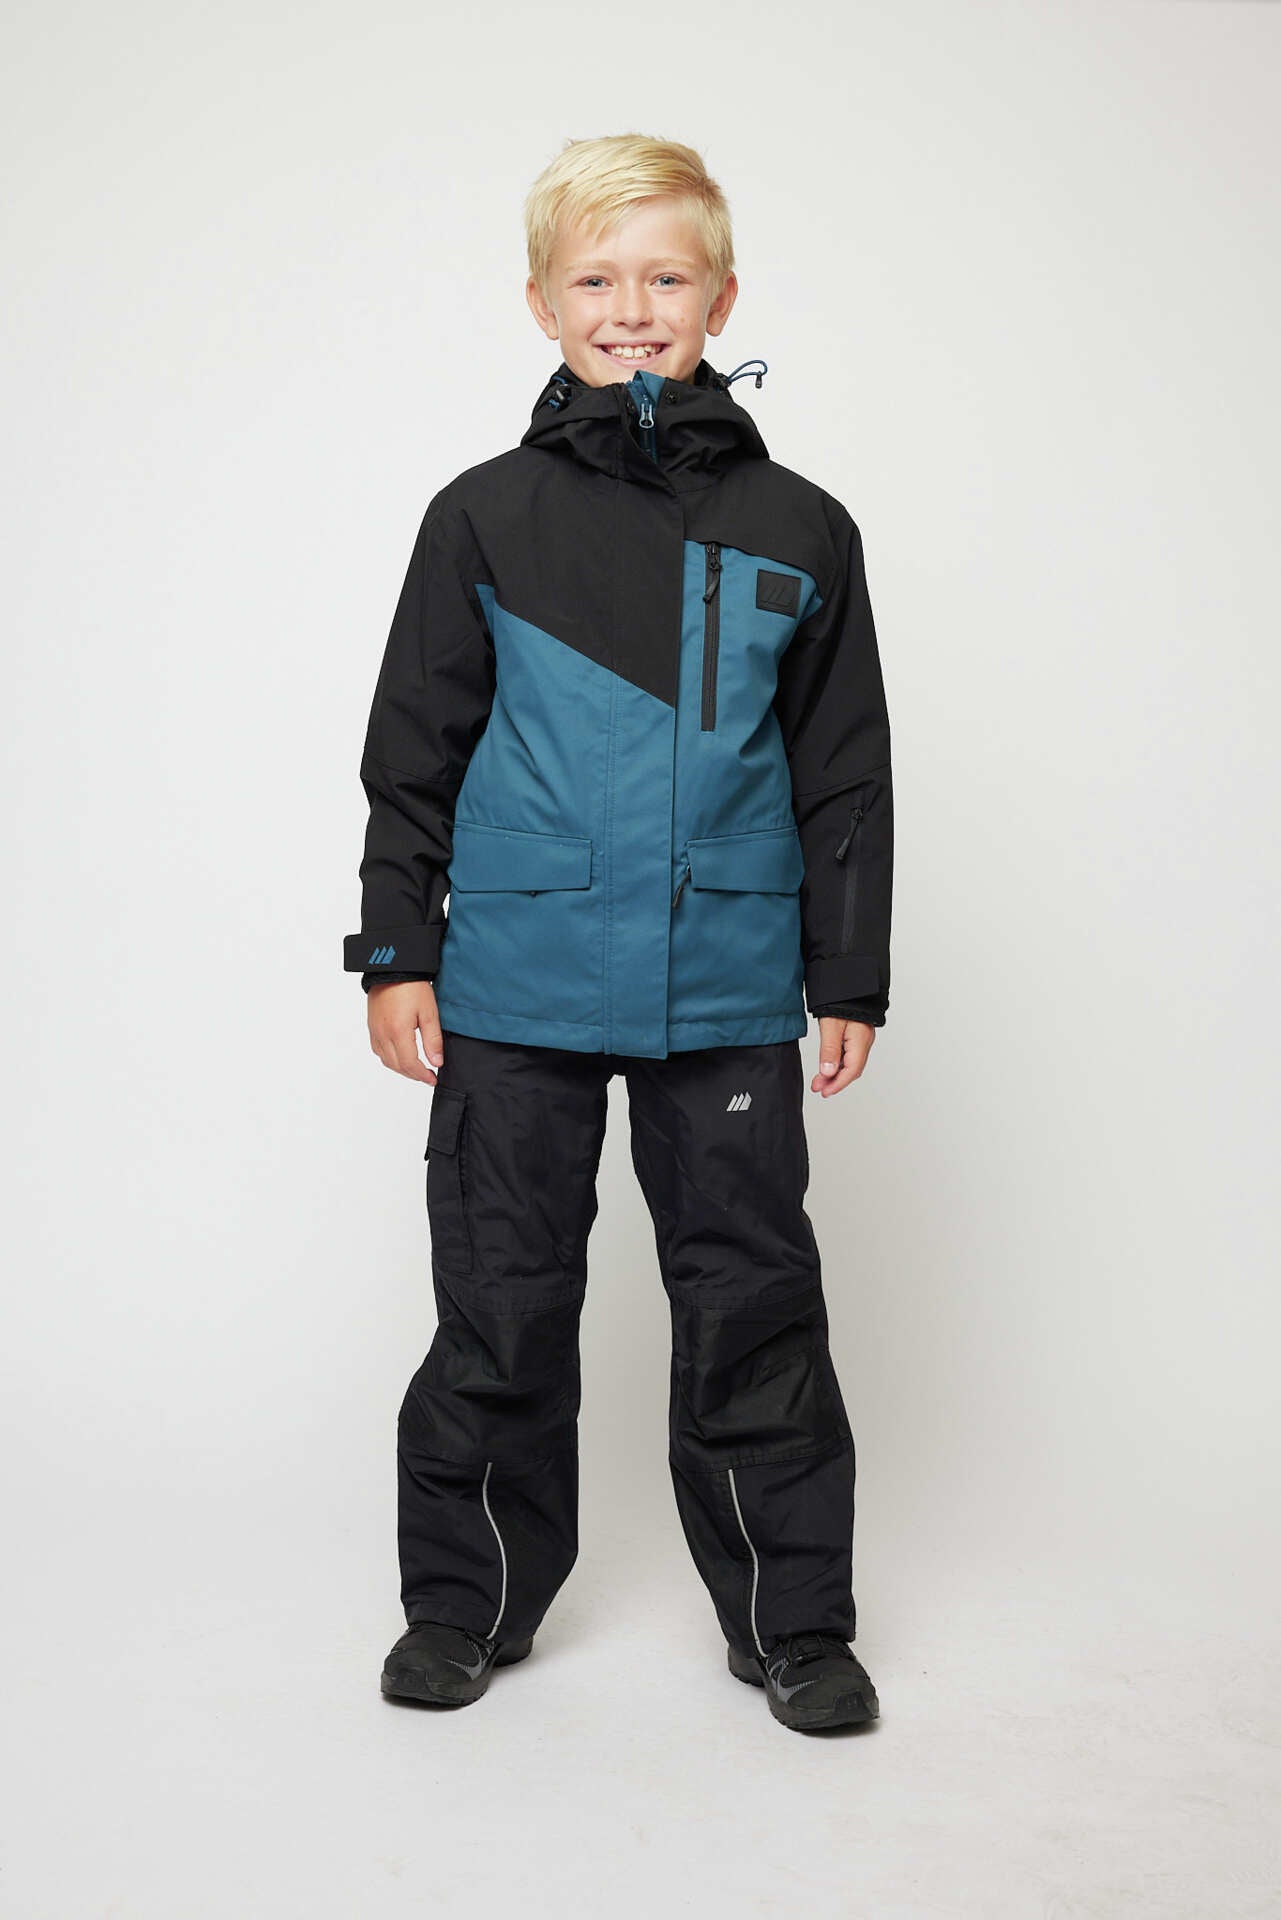 Technical ski jacket from Skogstad Fur